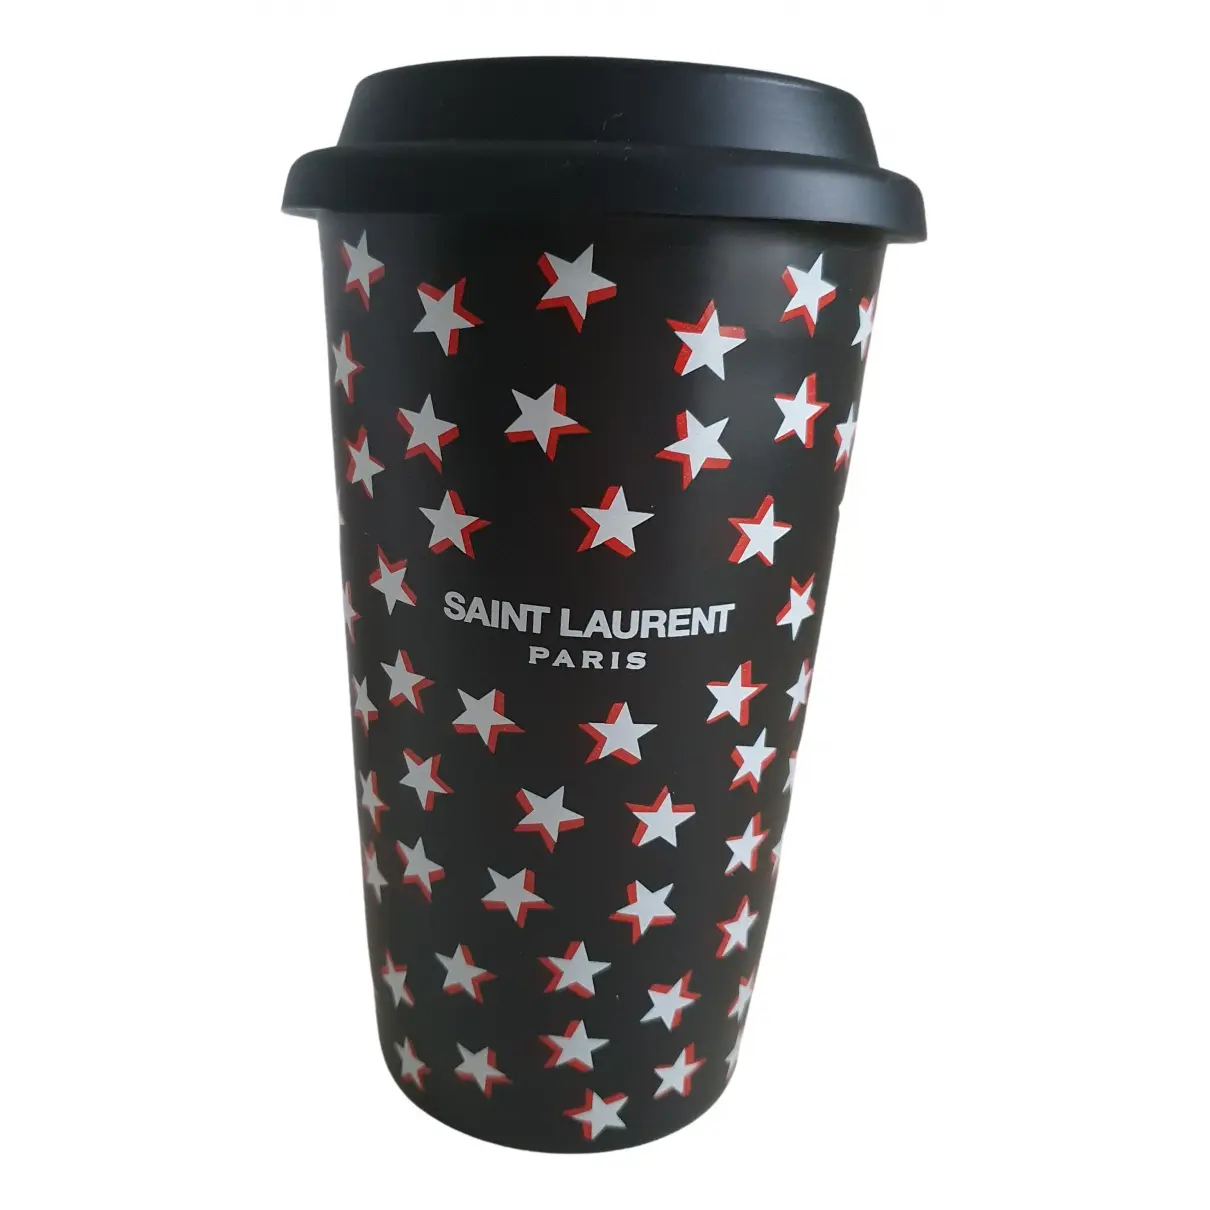 Ceramic mug Saint Laurent